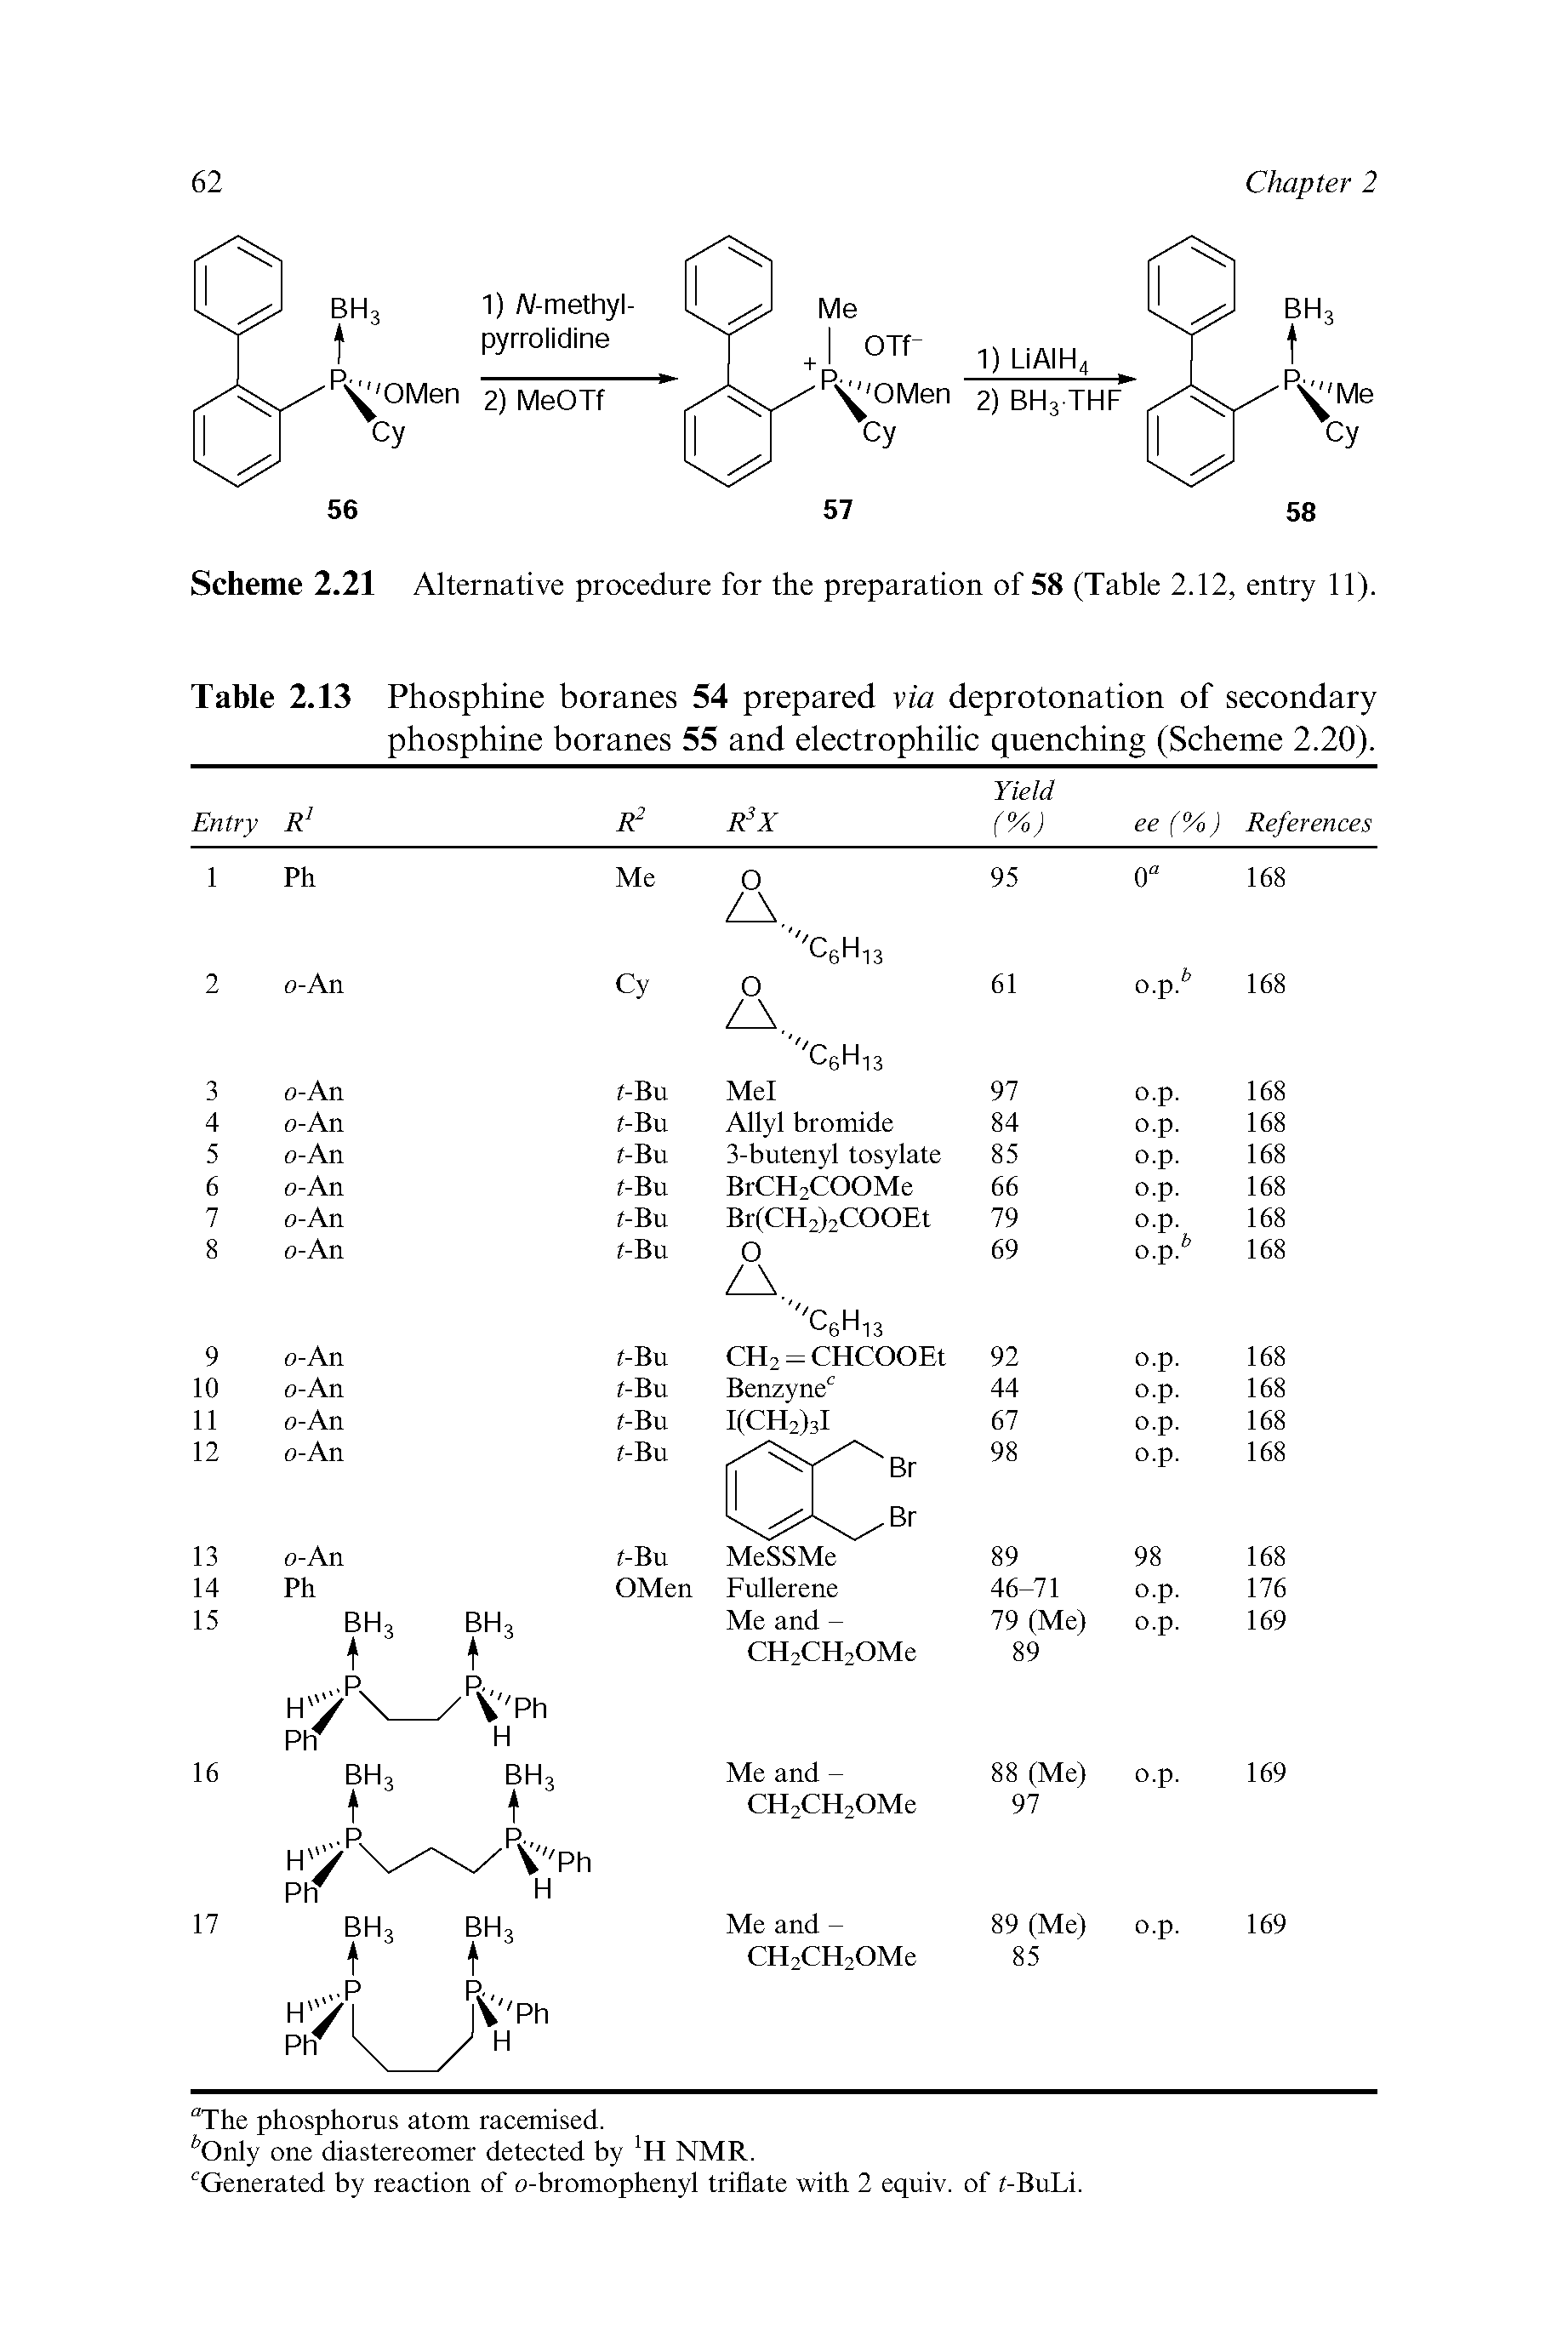 Table 2.13 Phosphine boranes 54 prepared via deprotonation of secondary phosphine boranes 55 and electrophilic quenching (Scheme 2.20).